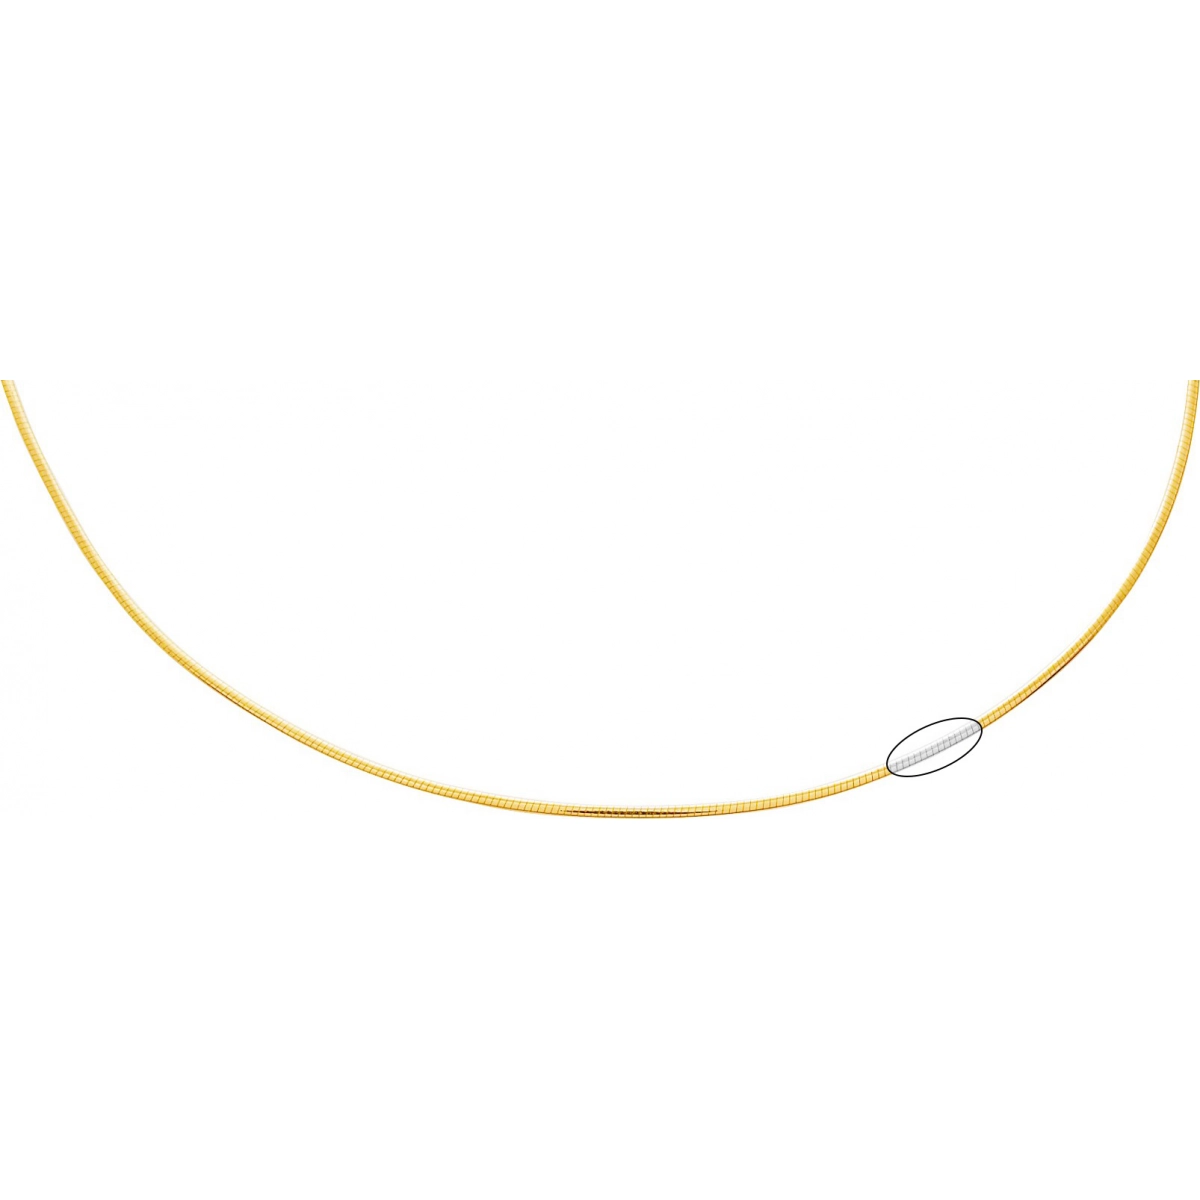 Necklace chain 'Avvolto' reversible 18K 2TG - Size: 45  Lua Blanca  2263.2.45